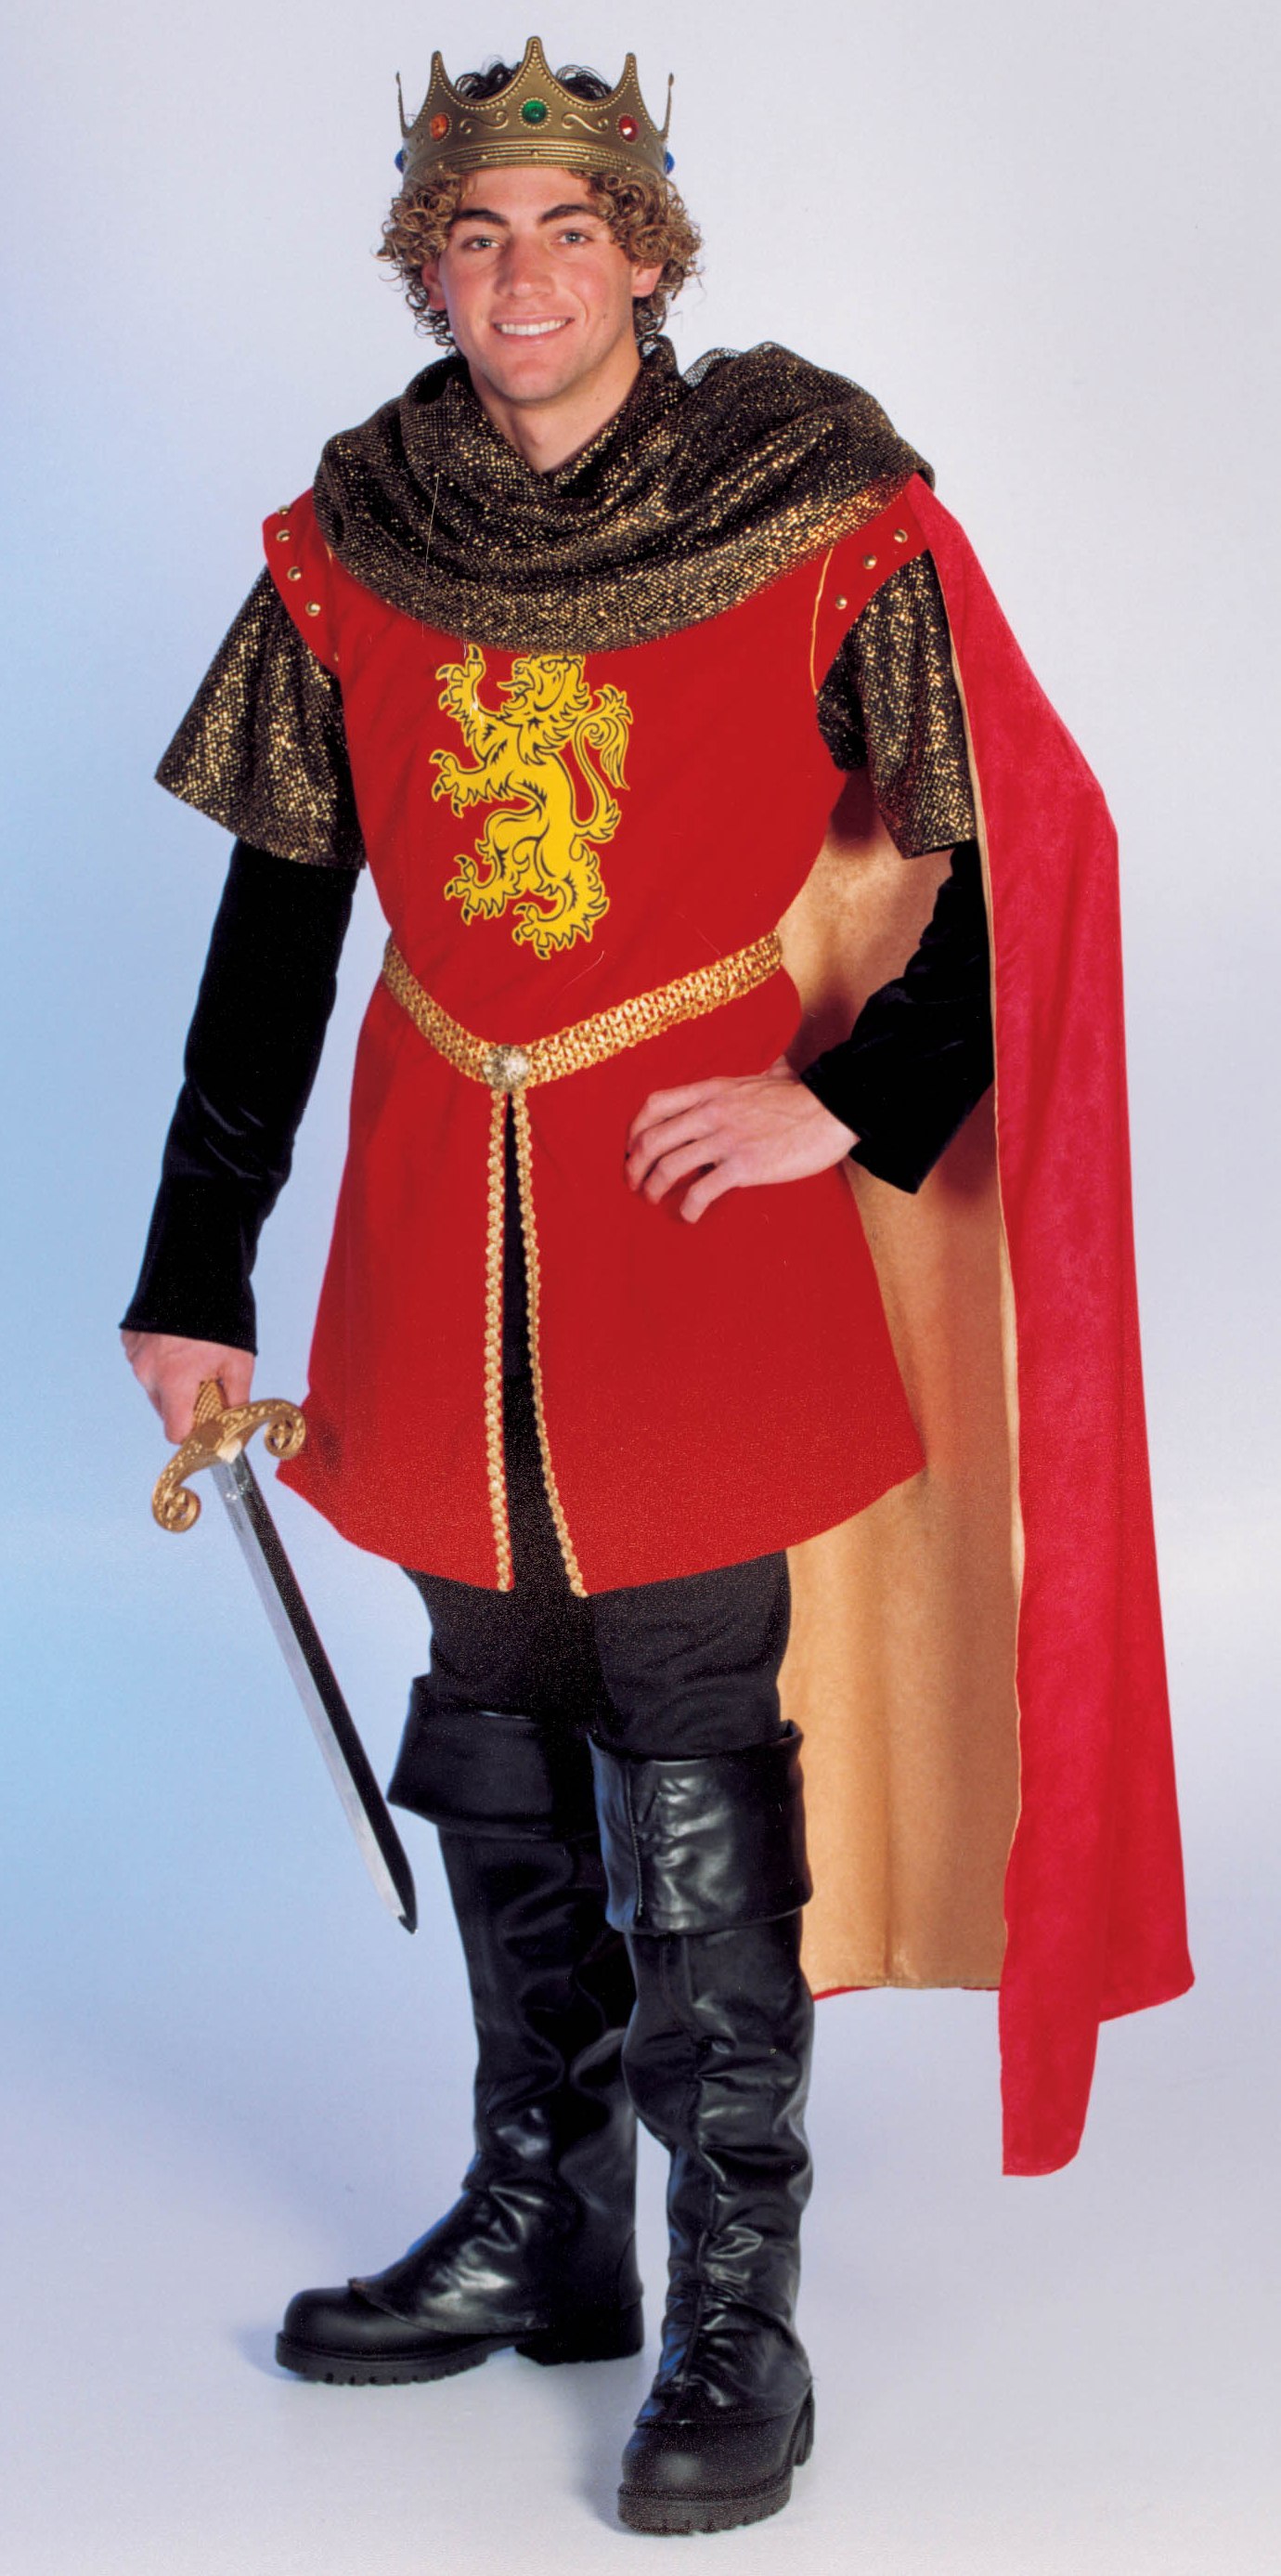 King Arthur Knight Costume